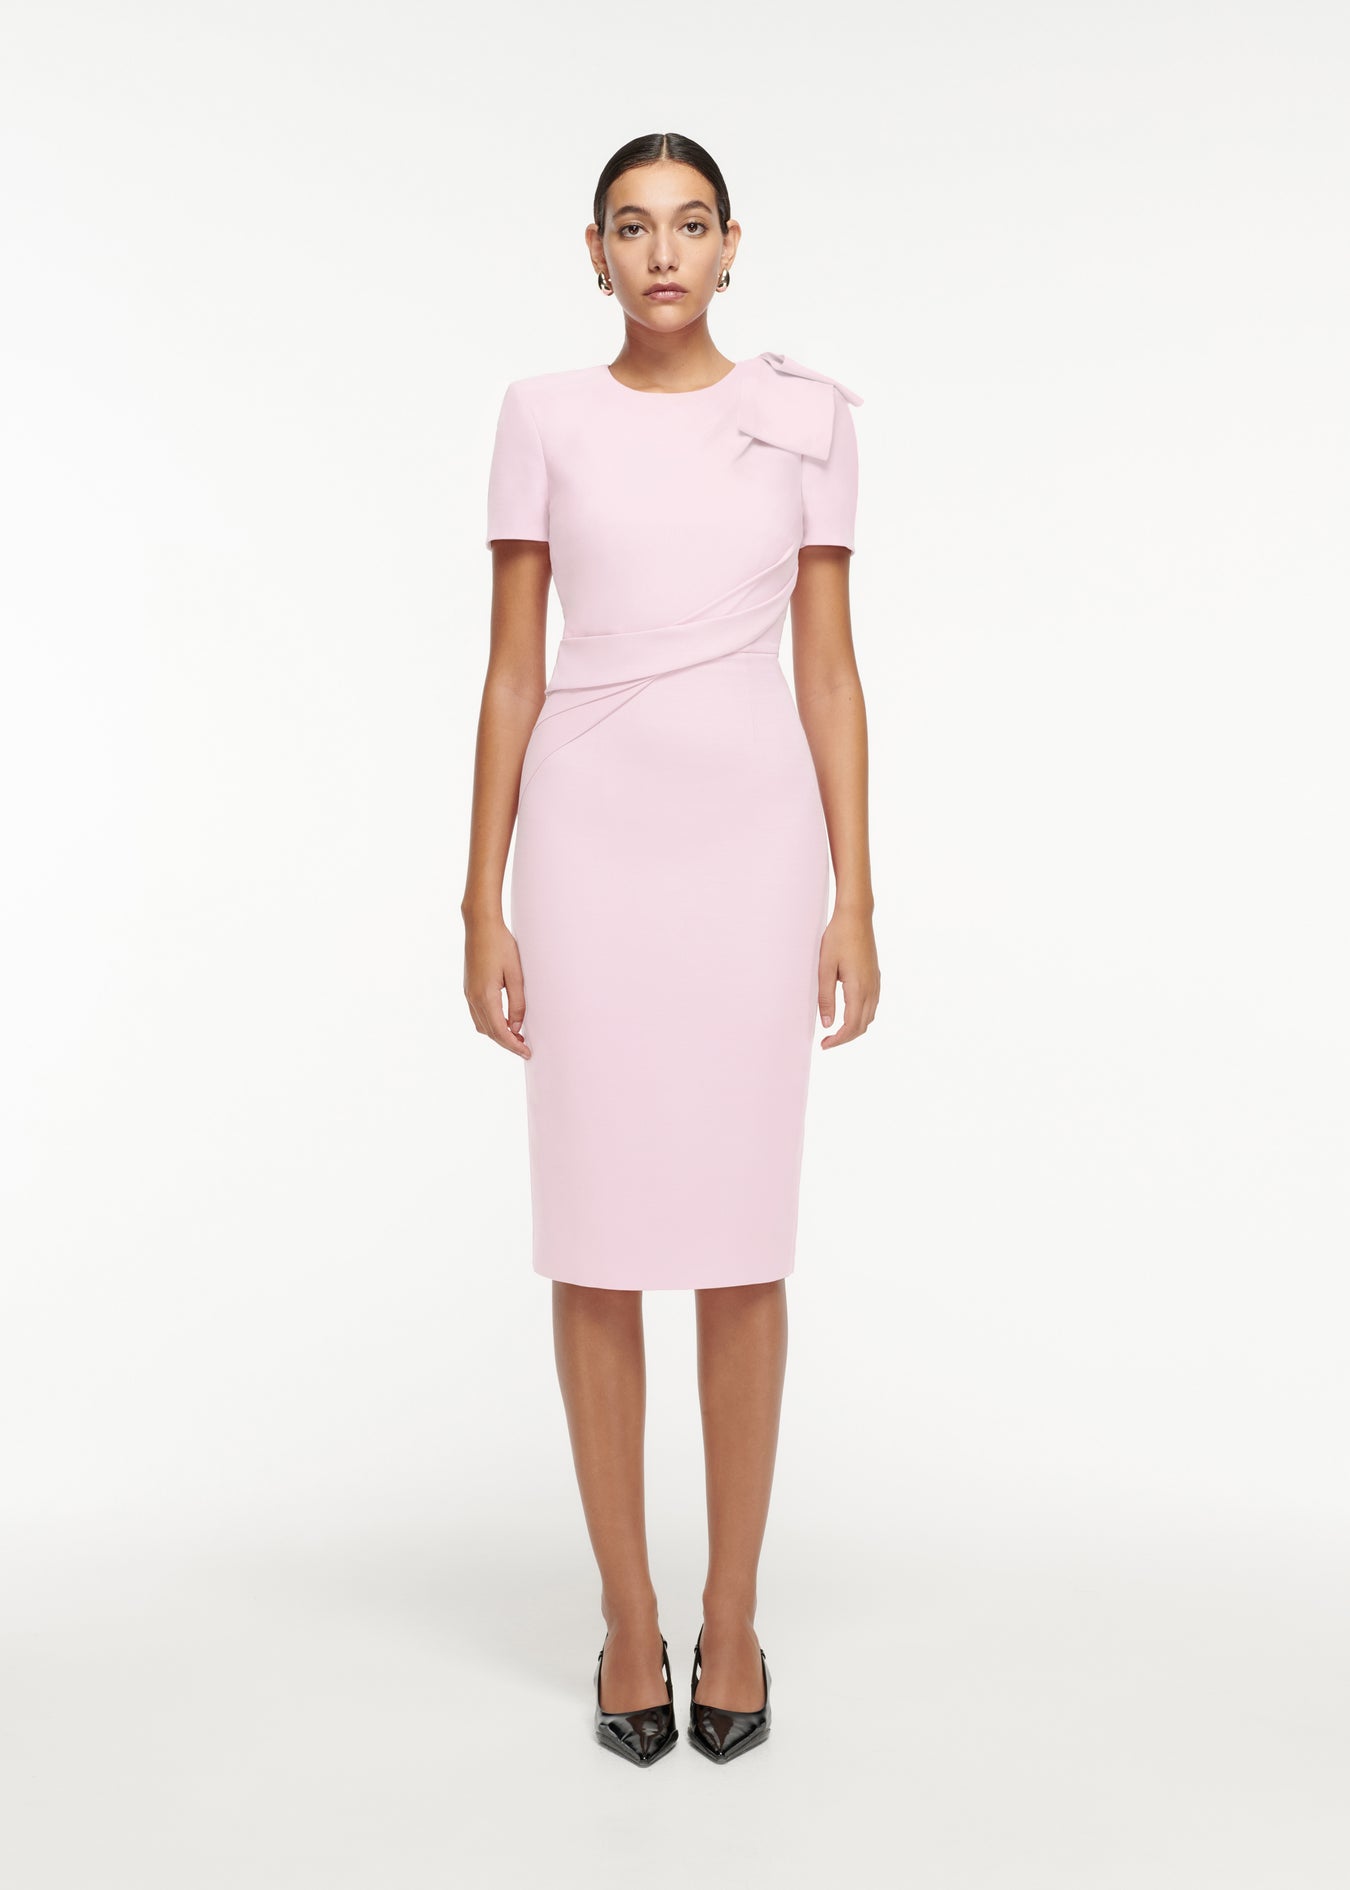 Glam Girl Pink Sequin Maxi Dress – Beginning Boutique US